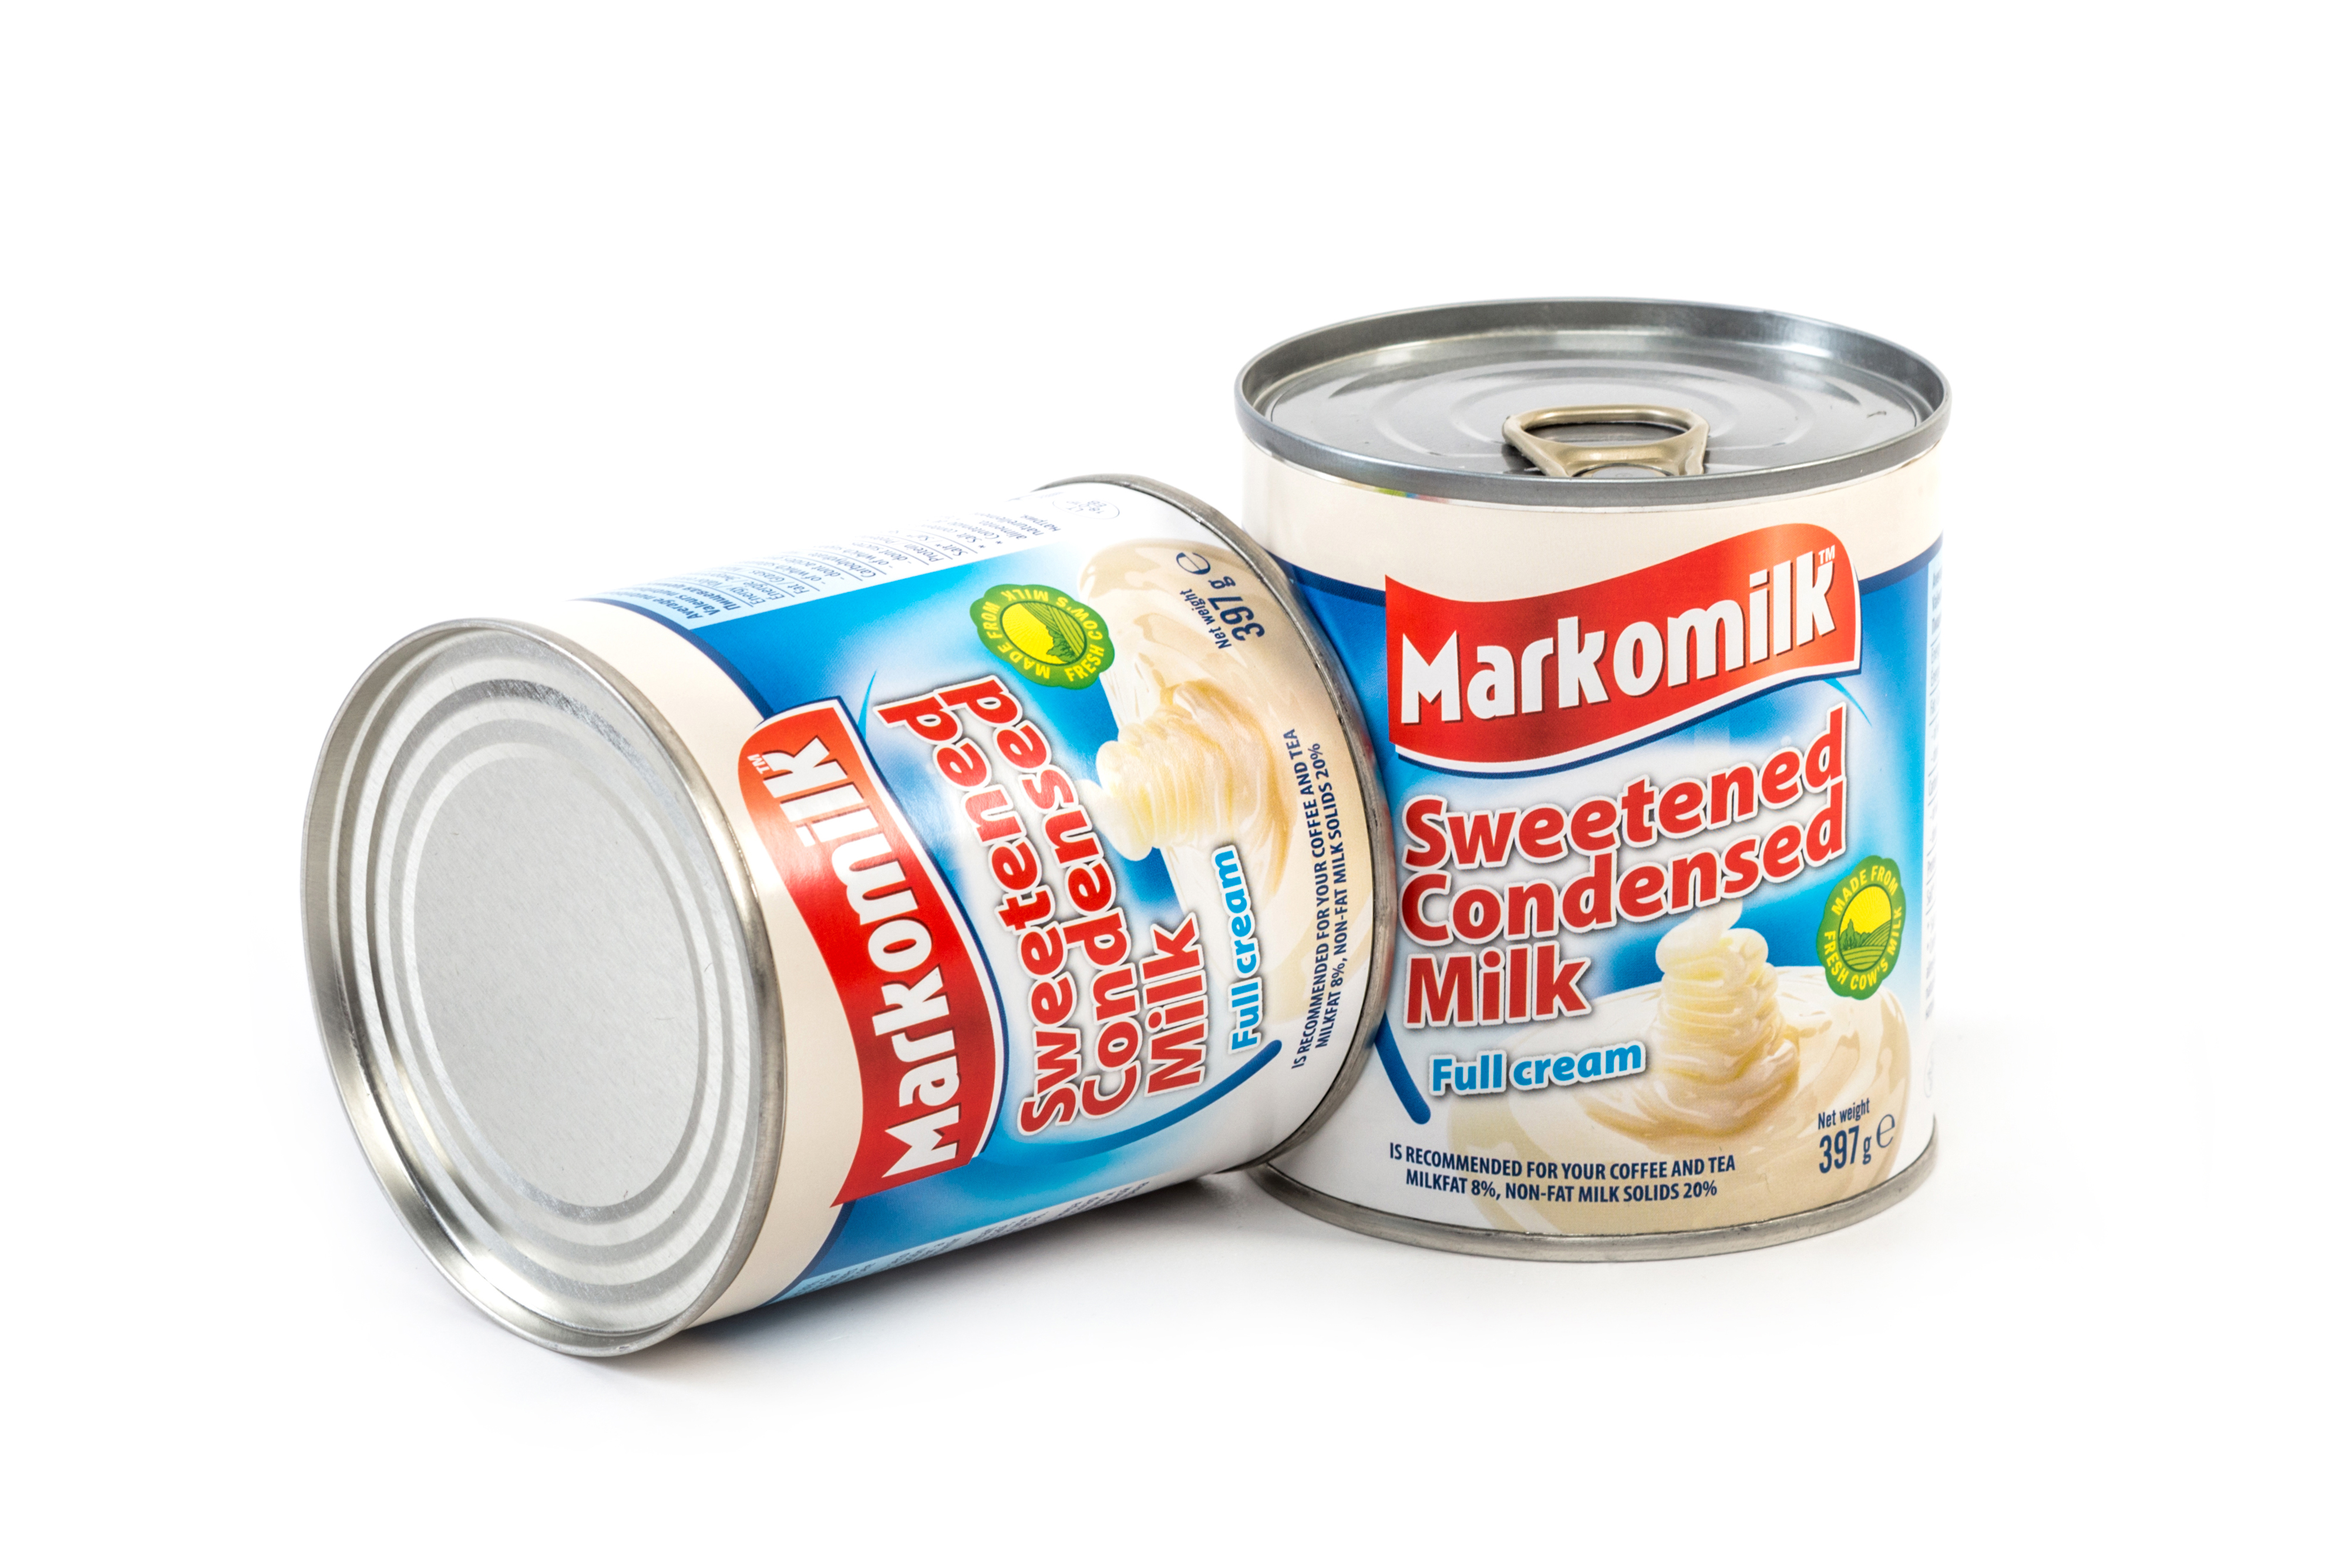 Gula susu kental manis full cream "MPK"